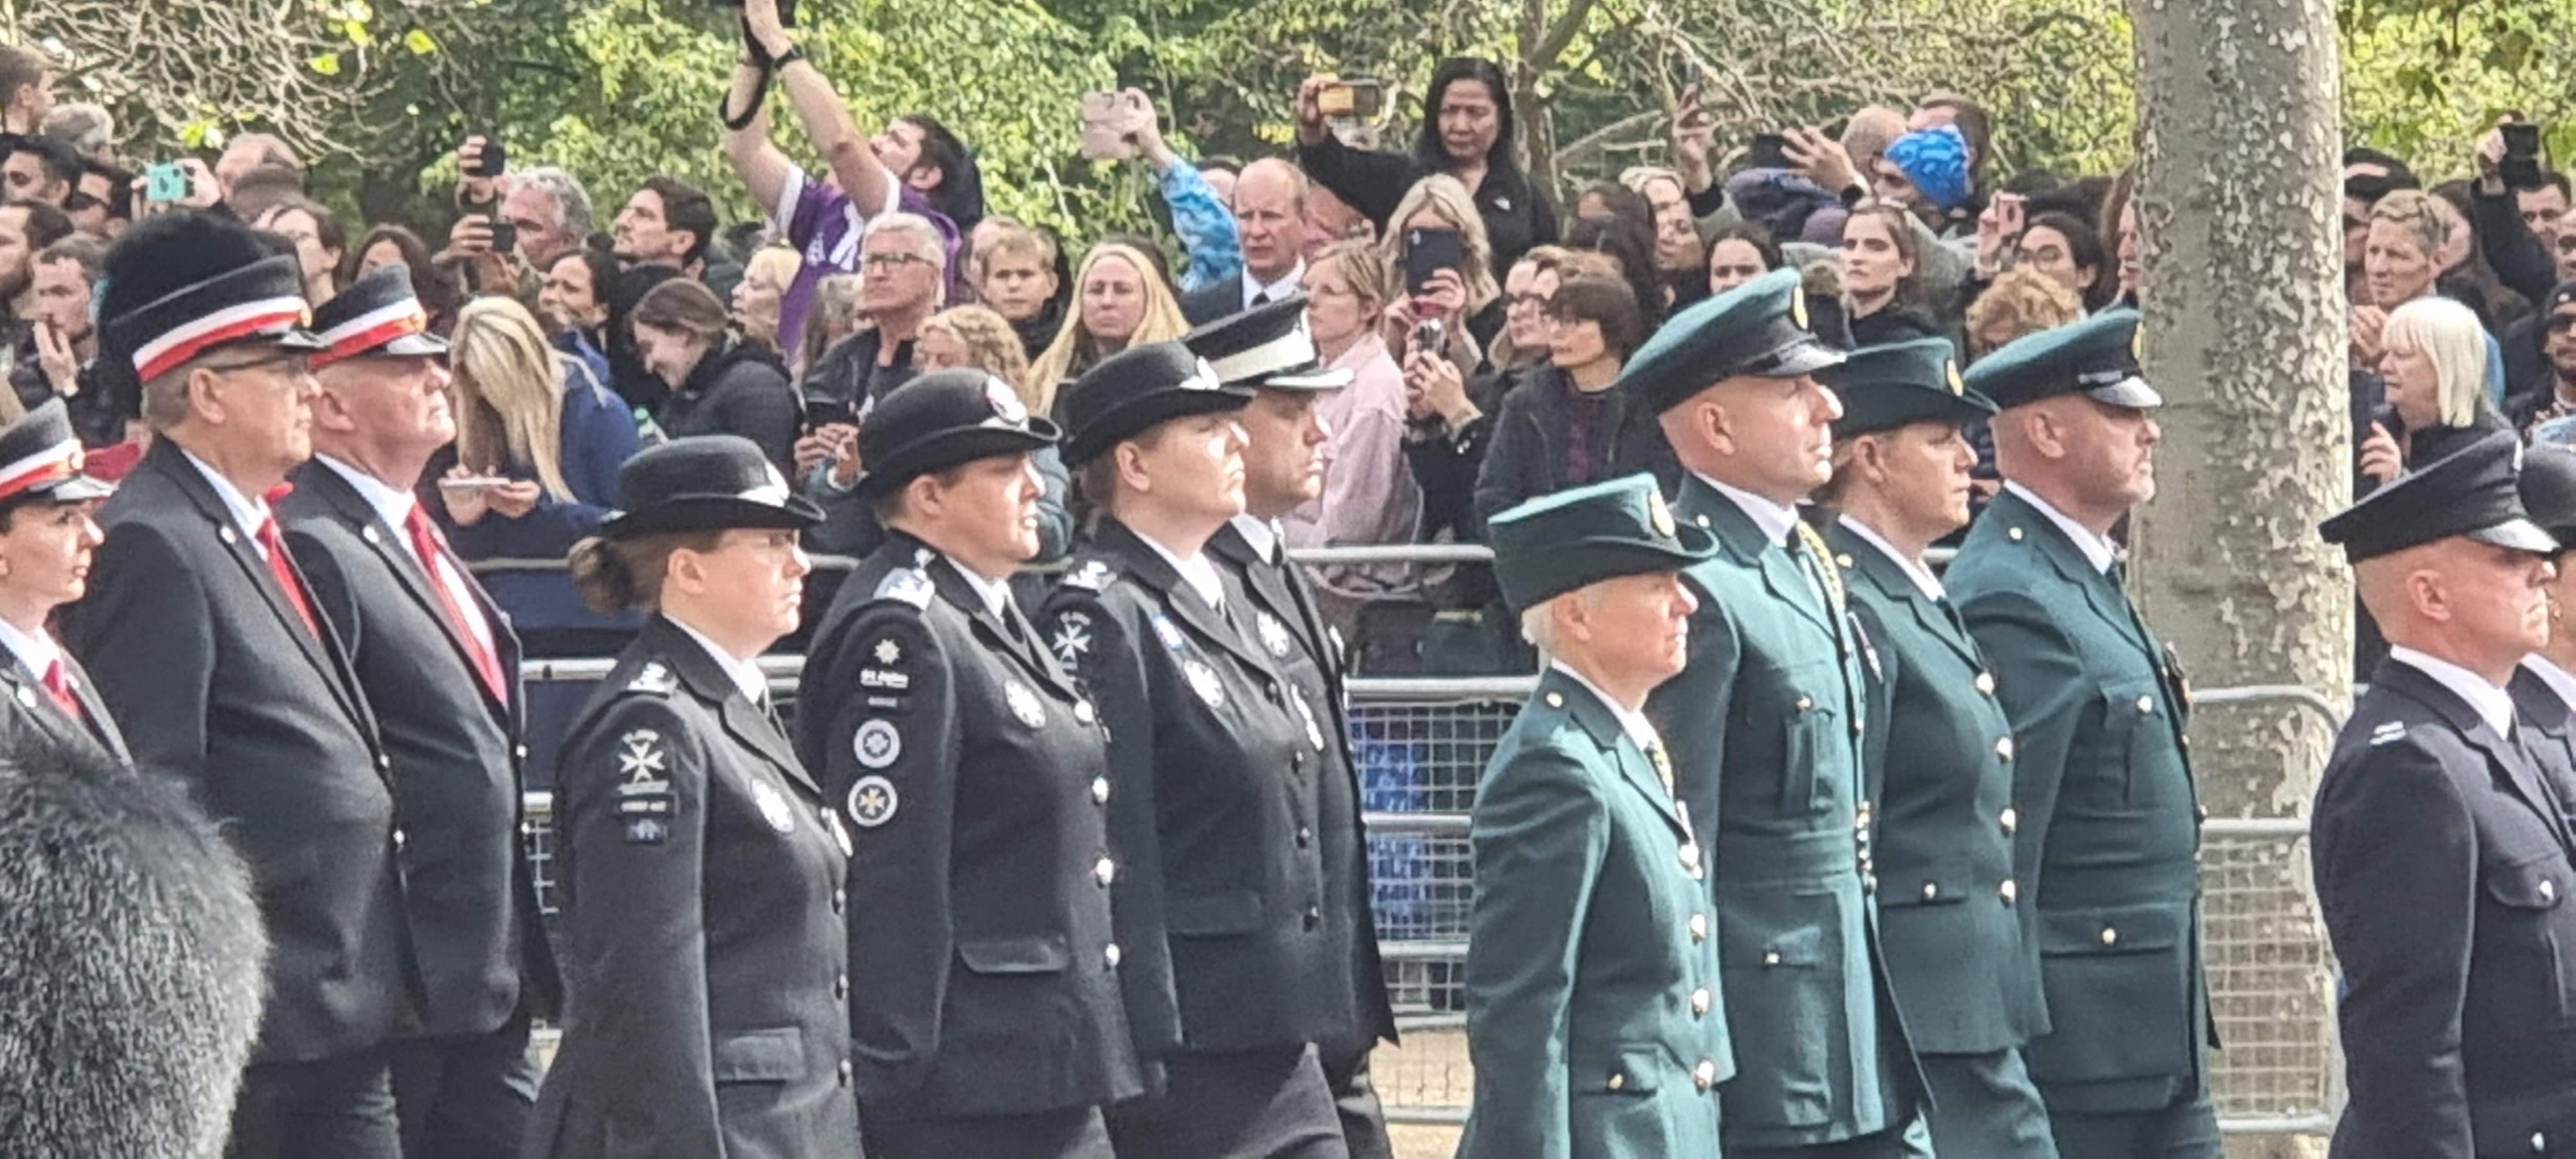 st john ambulance cymru at the queen's funeral